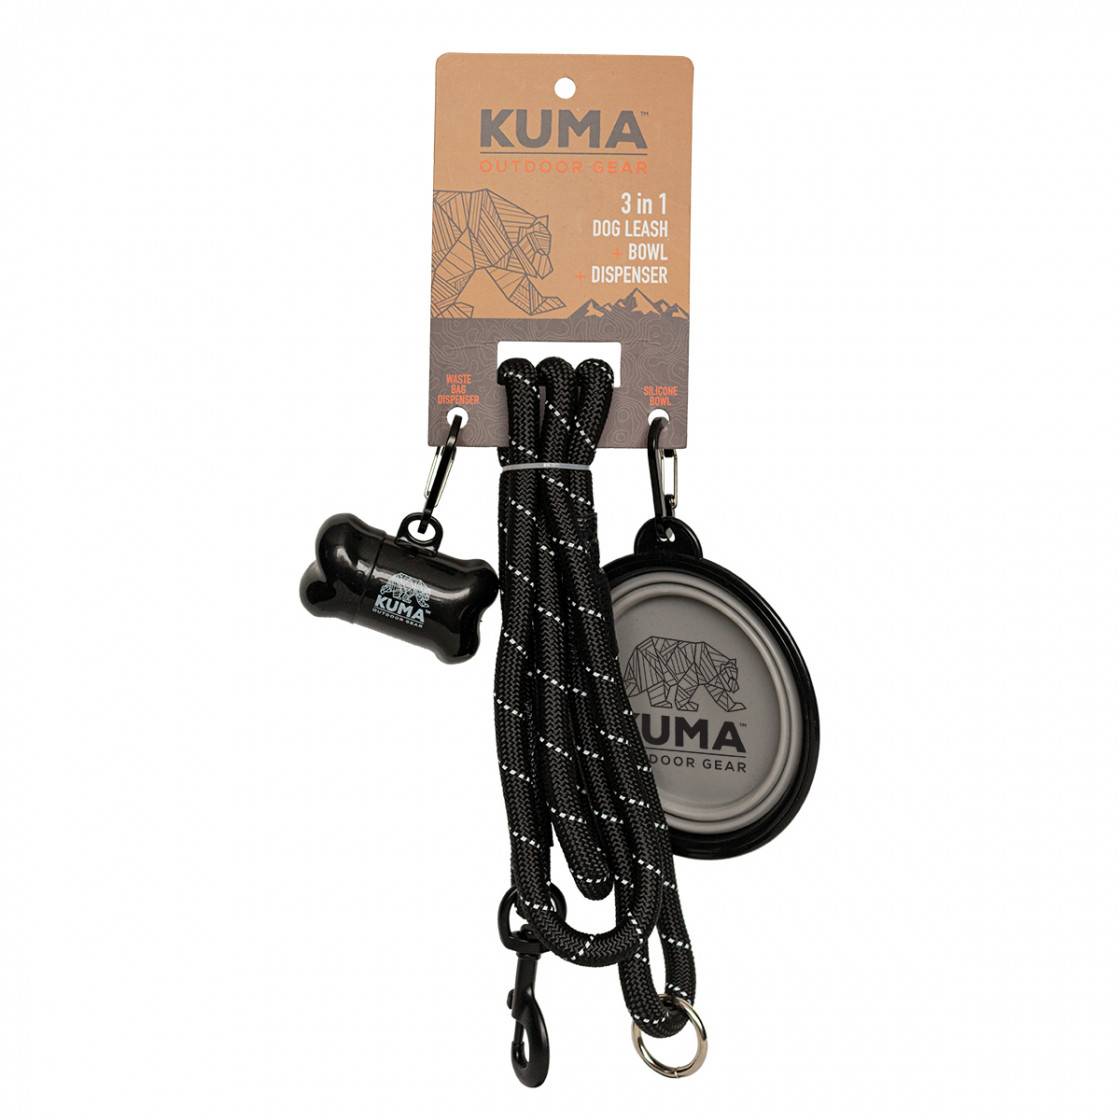 Kuma Outdoor Gear Qualifies for Free Shipping Kuma Outdoor Gear 3-In-1 Dog Leash Black/Gray #KM-31DL-BG